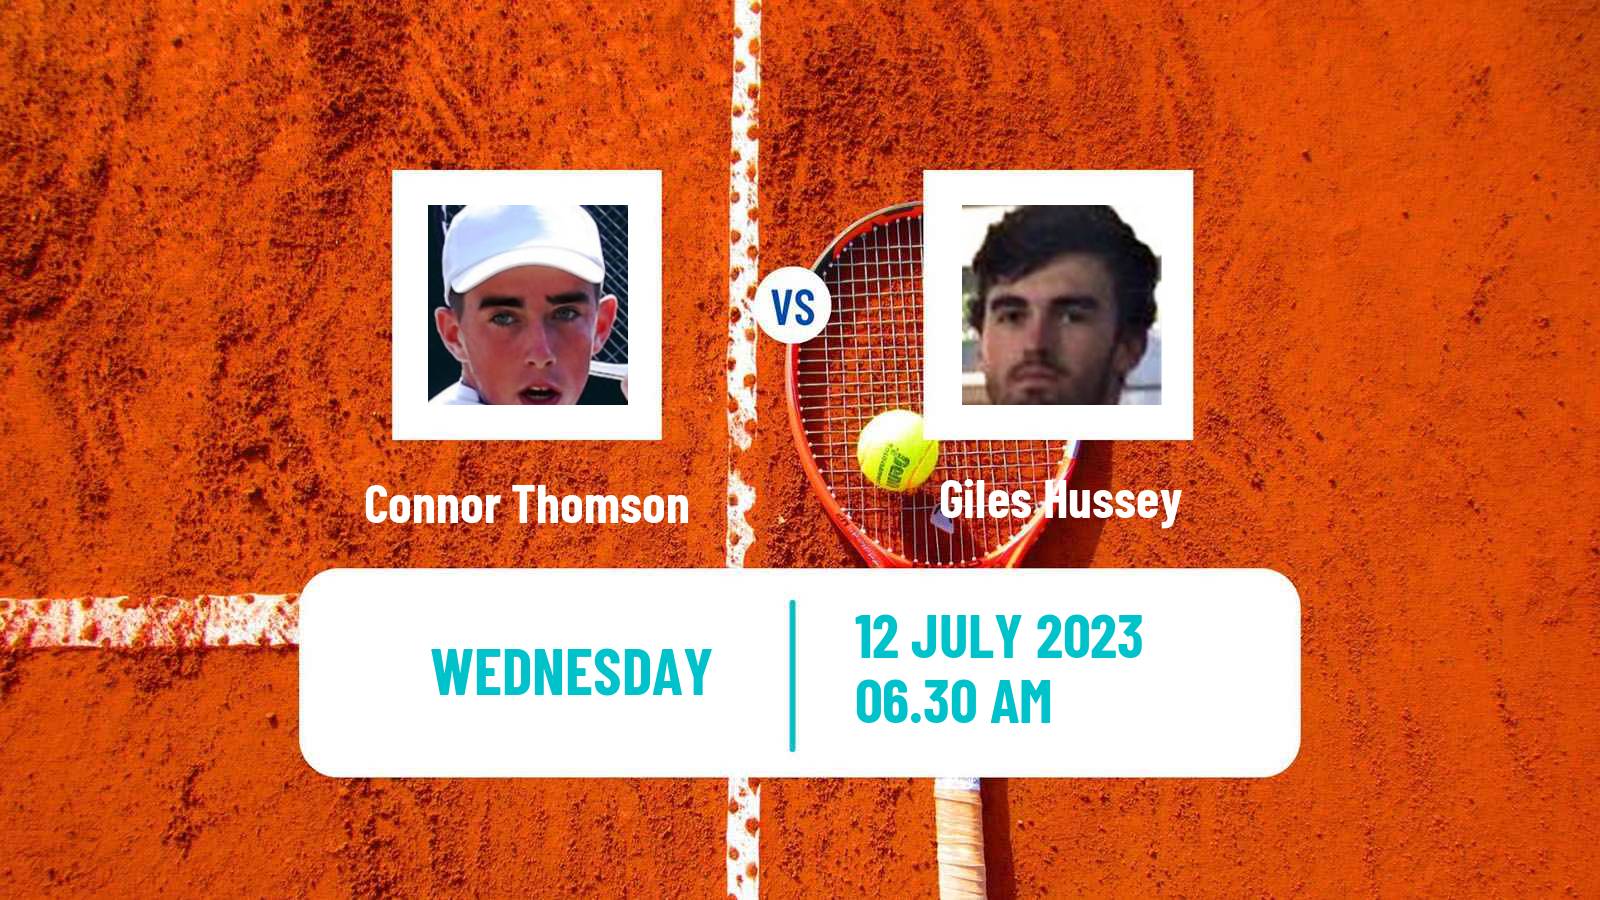 Tennis ITF M25 Nottingham 4 Men Connor Thomson - Giles Hussey